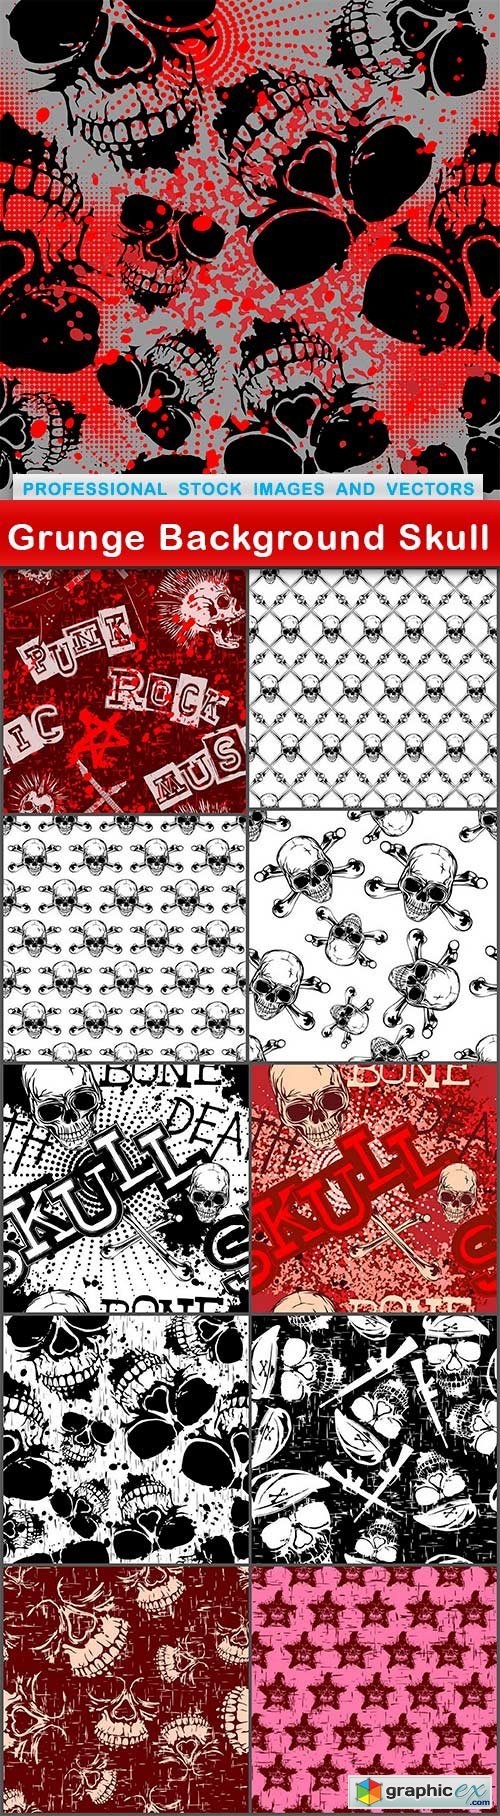 Grunge Background Skull - 11 EPS